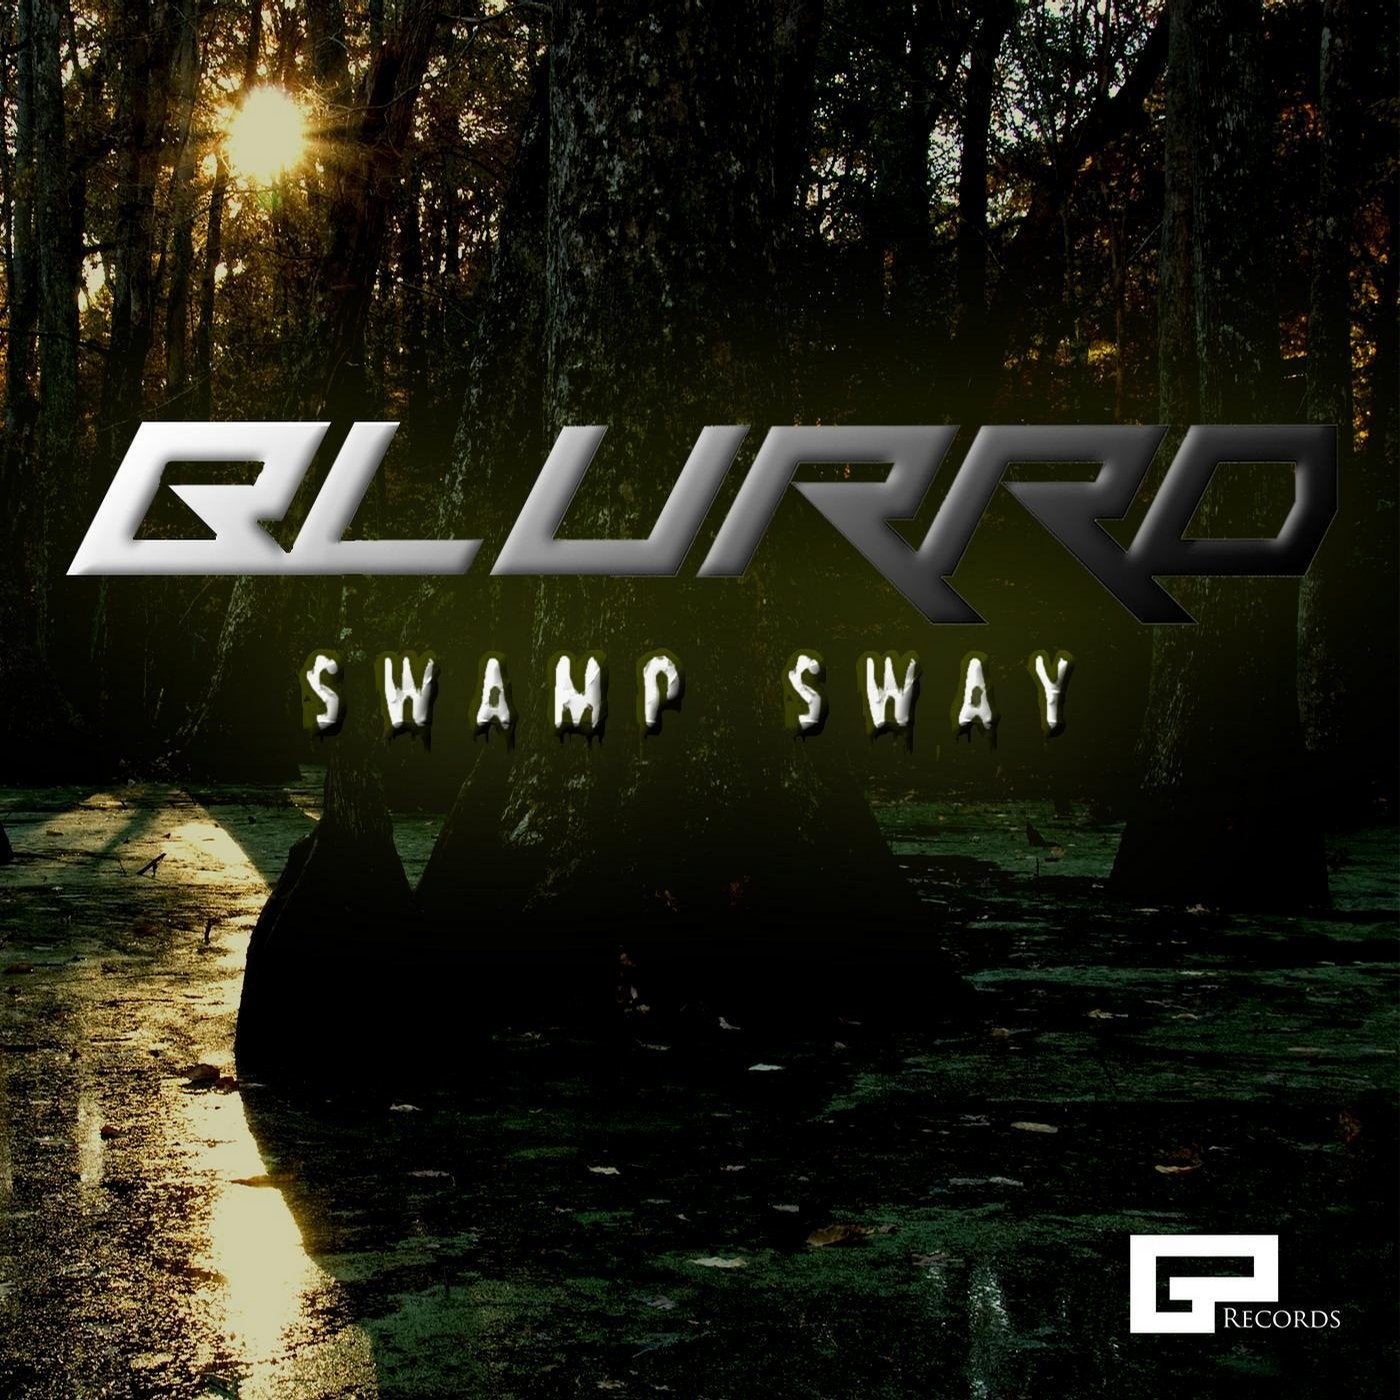 Swamp Sway